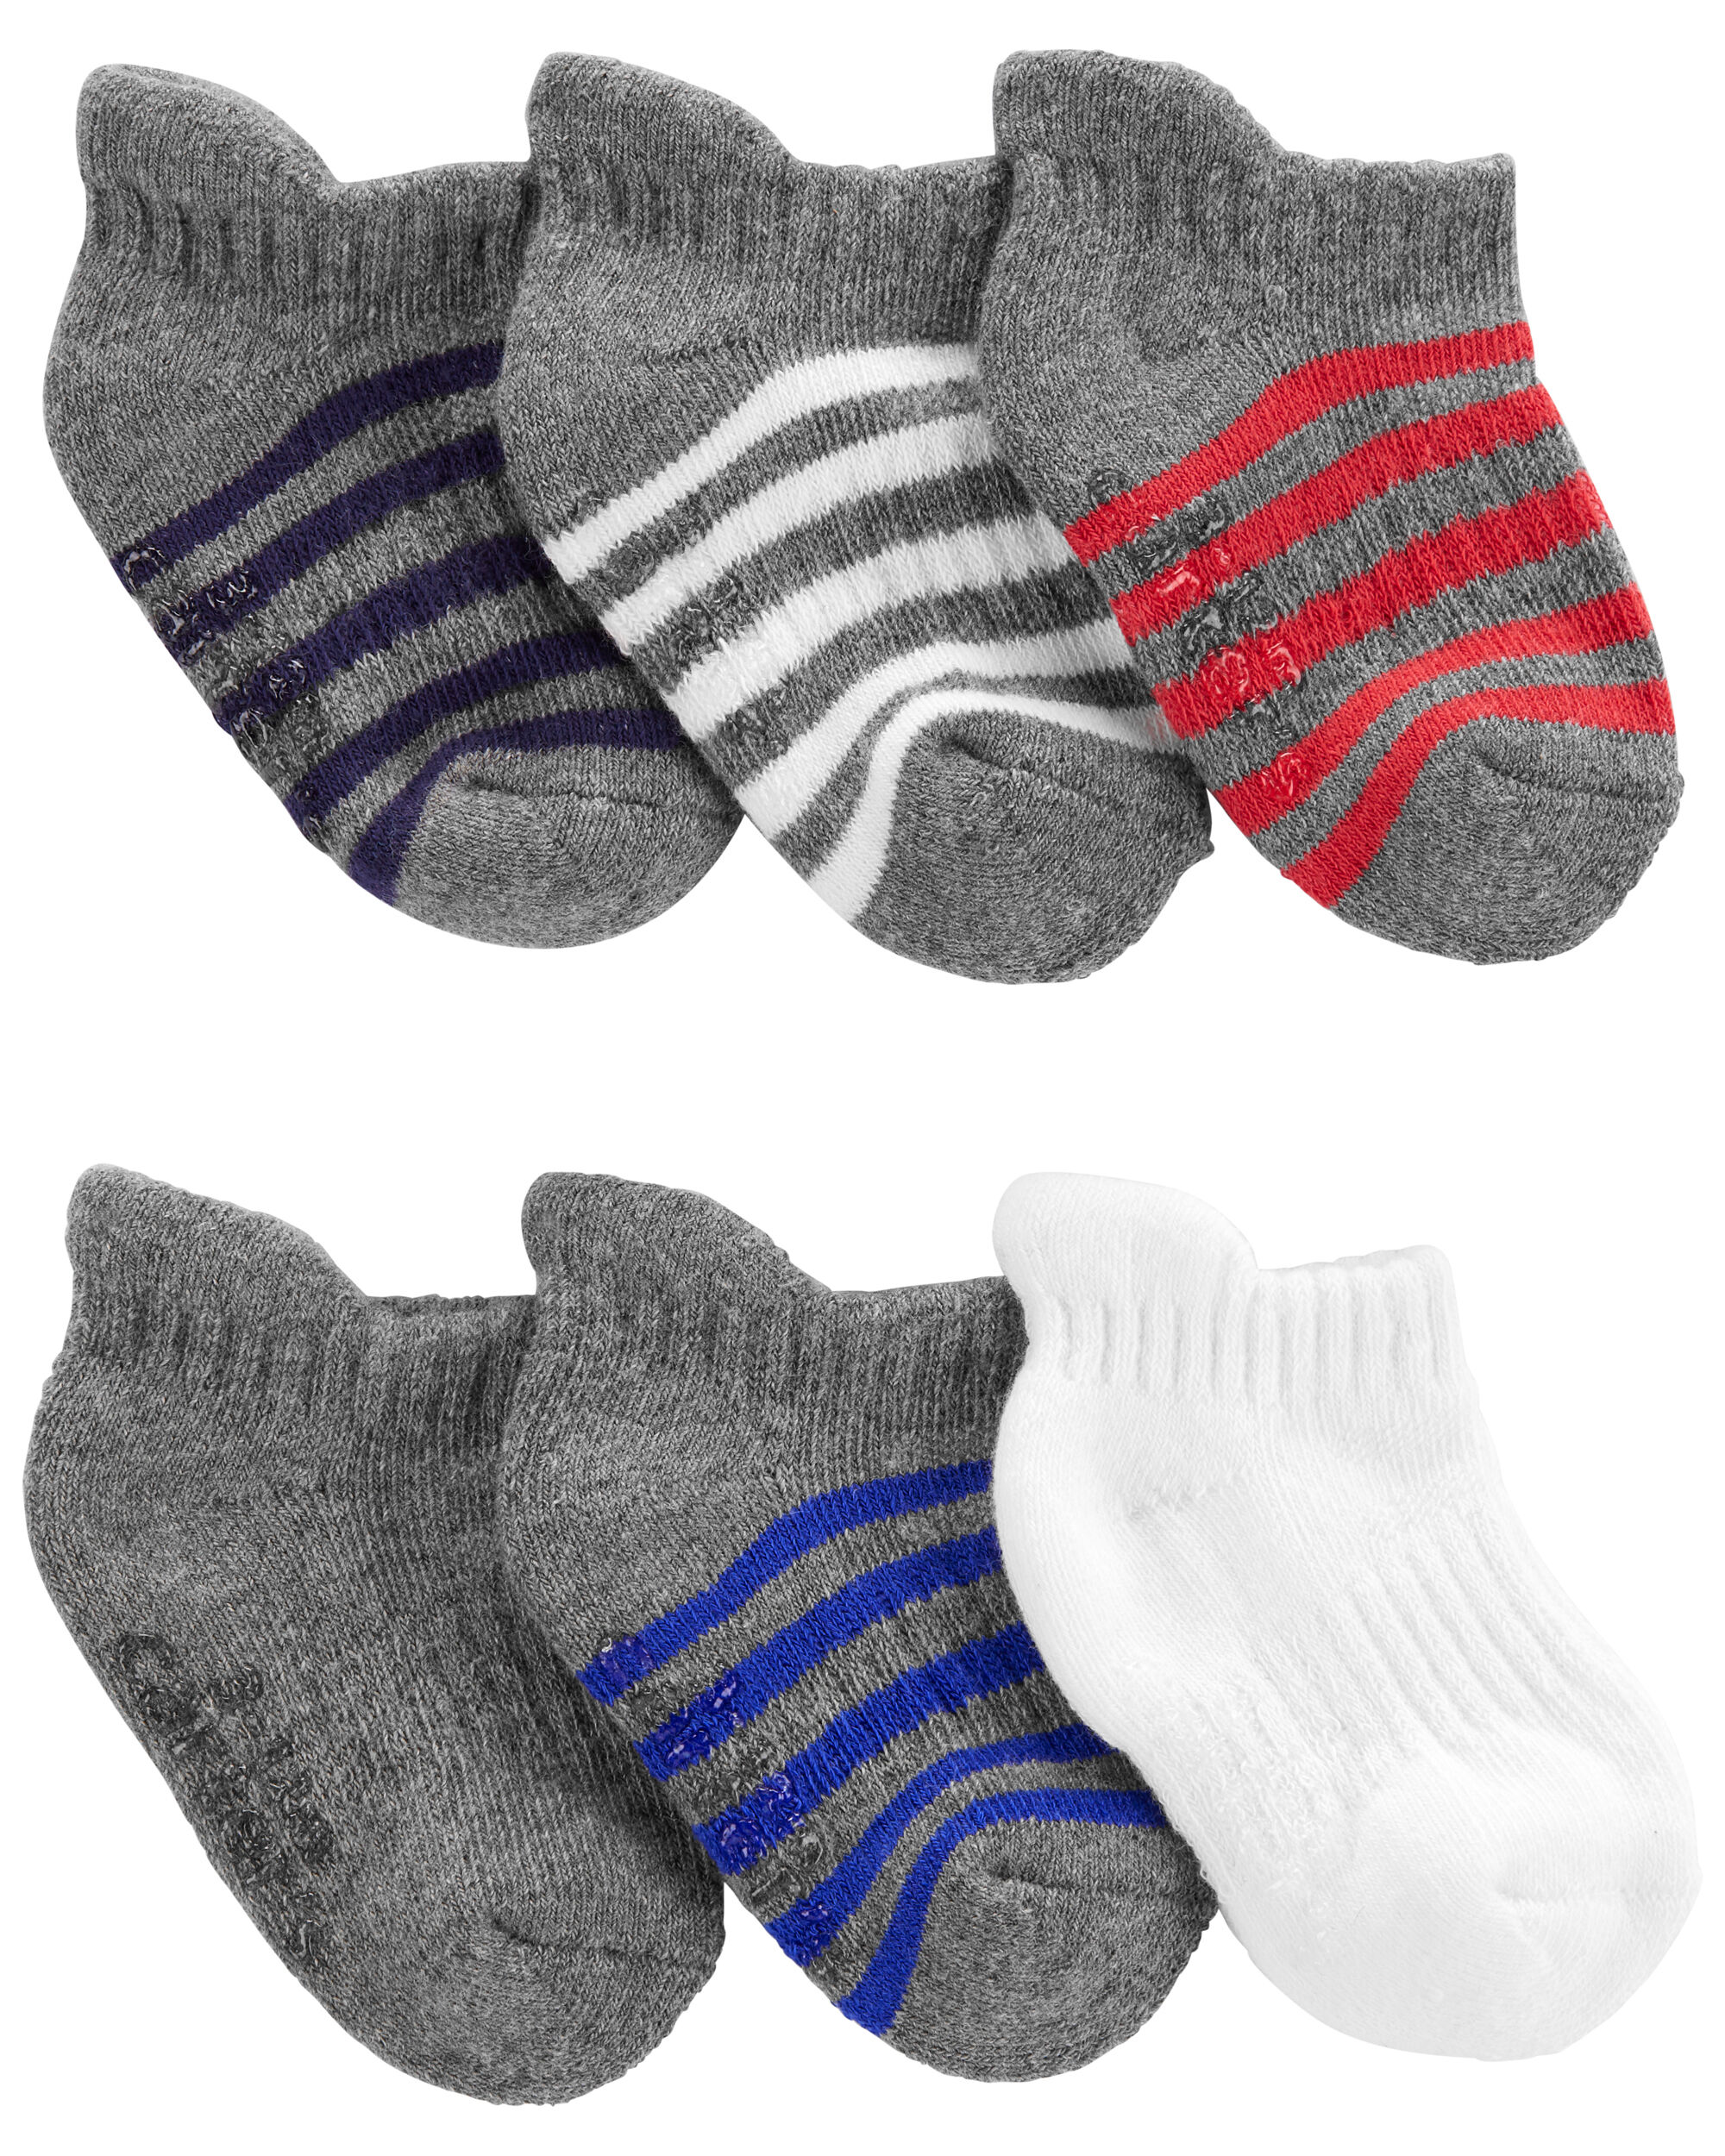 Carters 6-Pack Ankle Socks